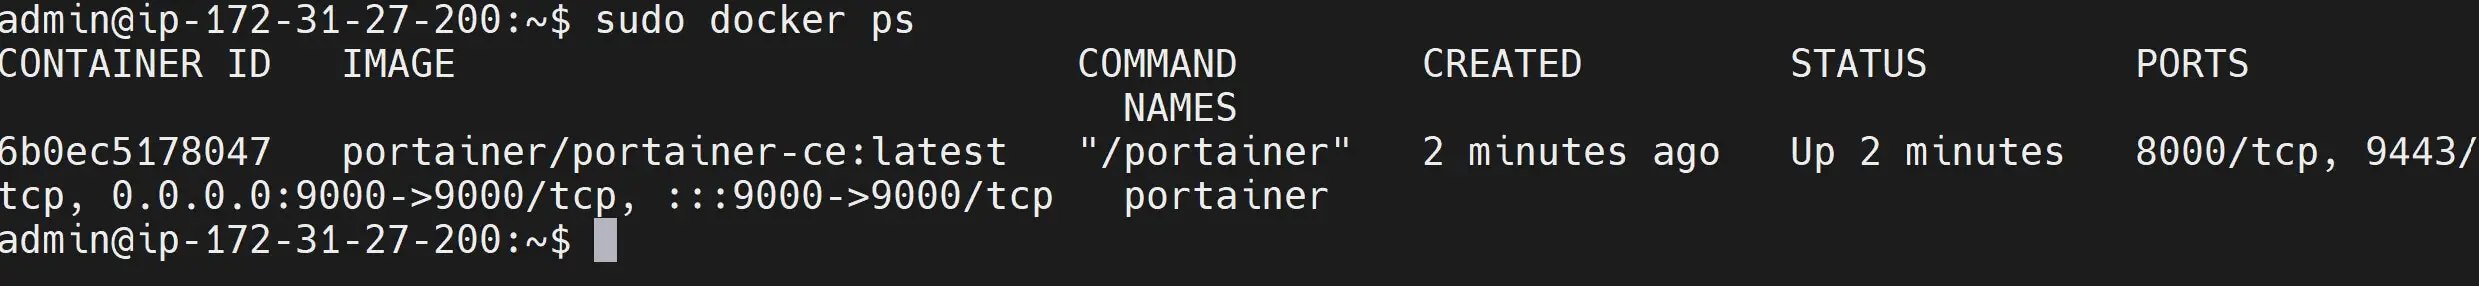 Installing Portainer using Docker on Debian